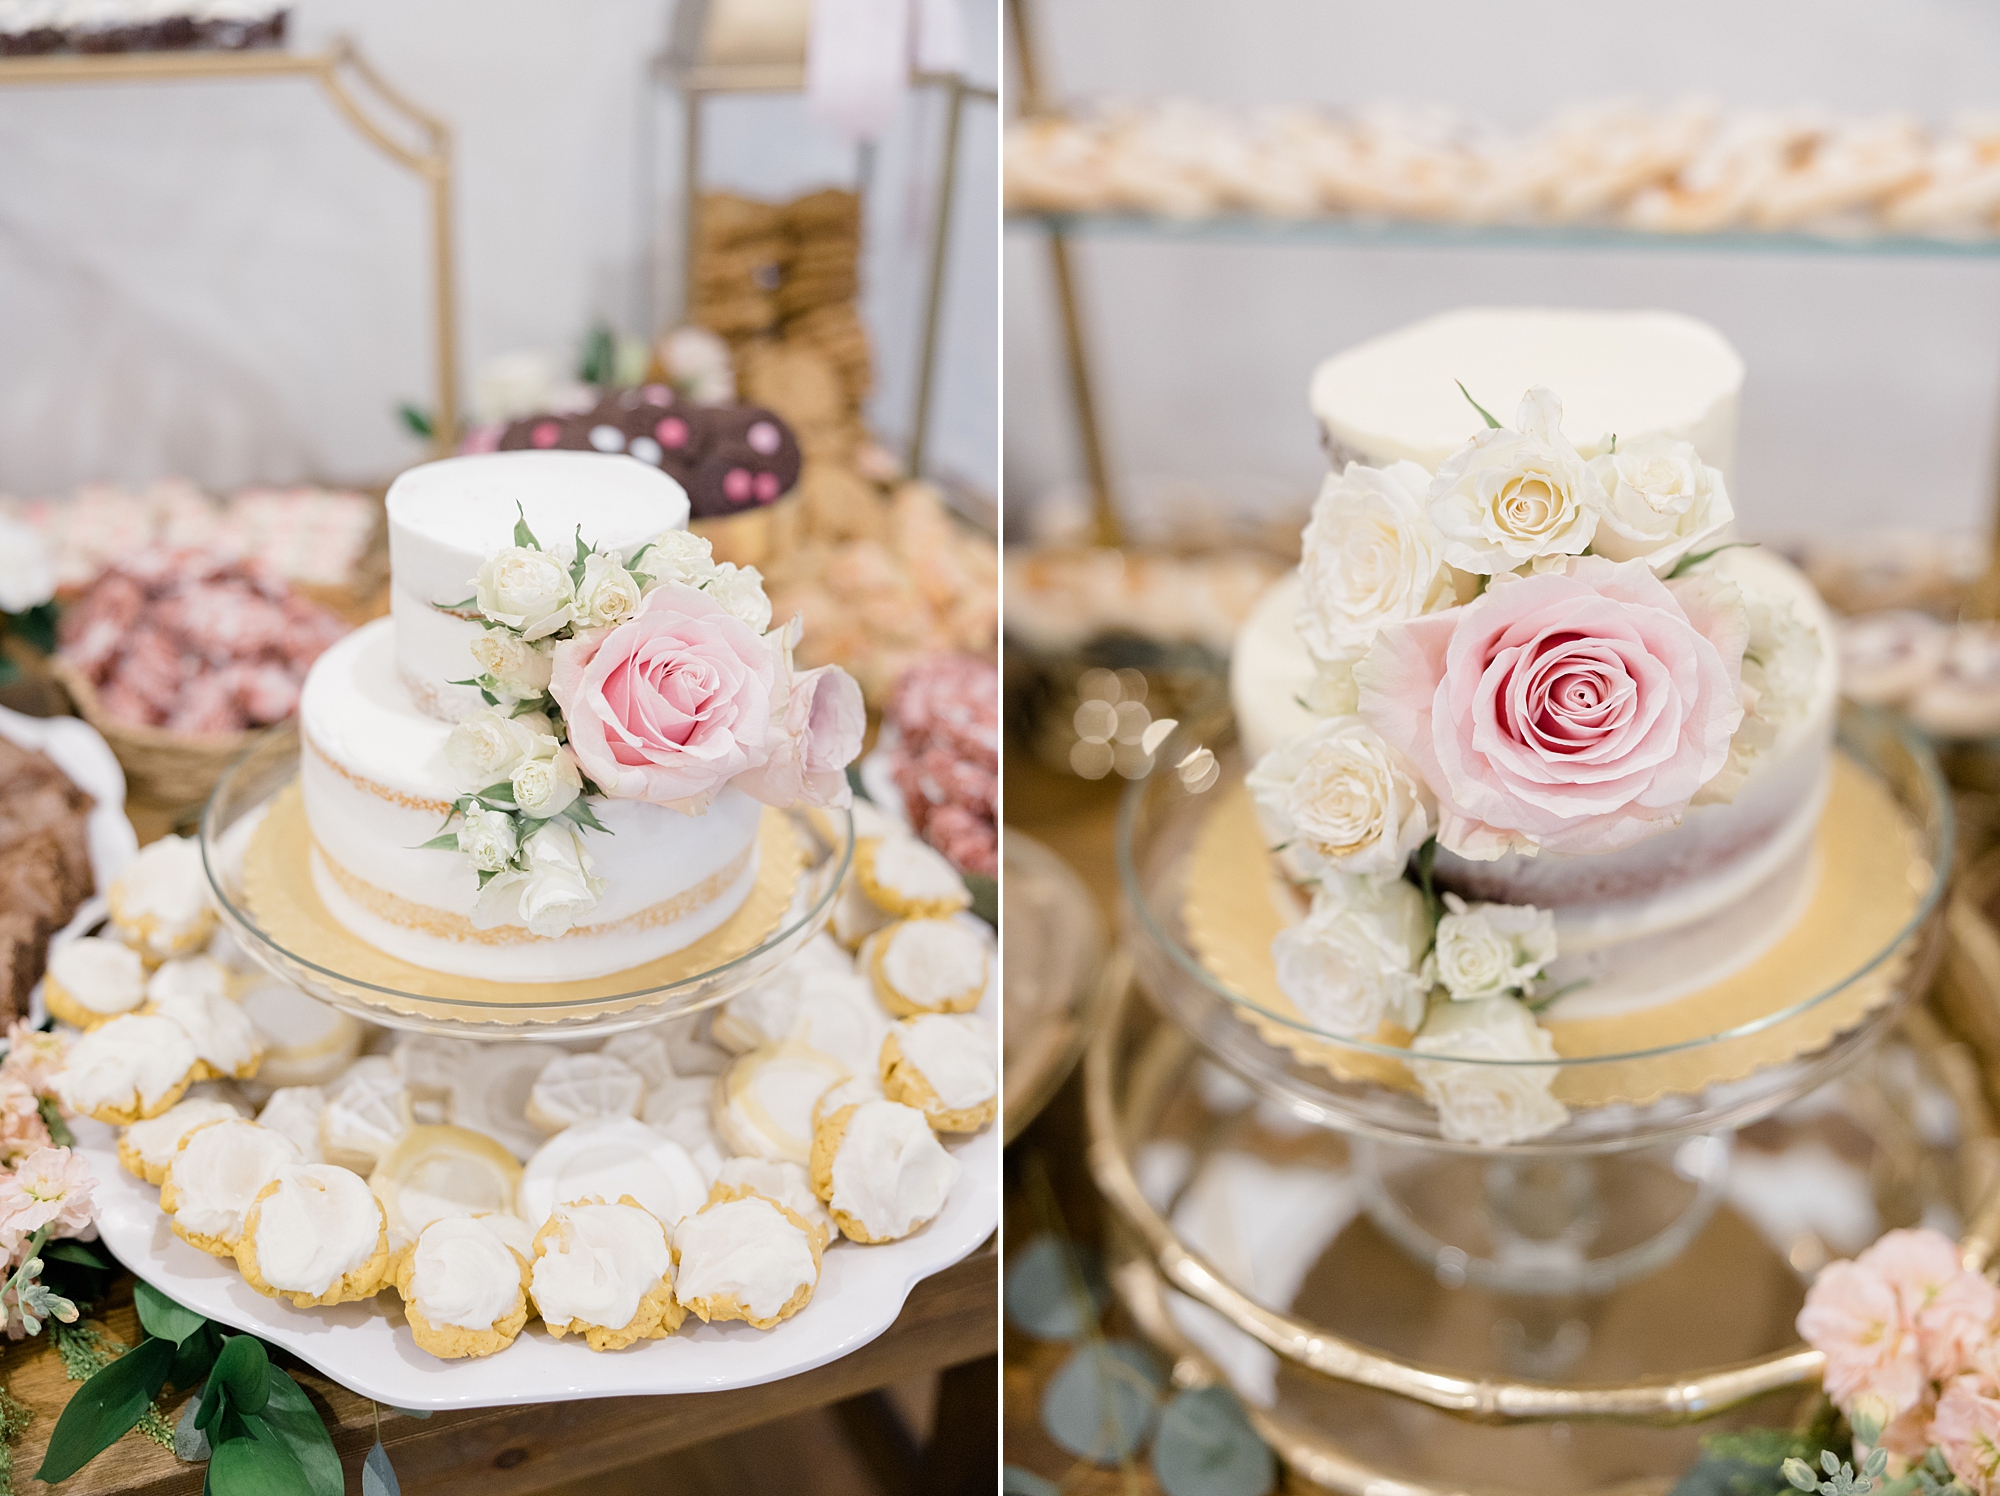 tiered wedding cake and desserts at Oak + Ivy summer wedding reception 